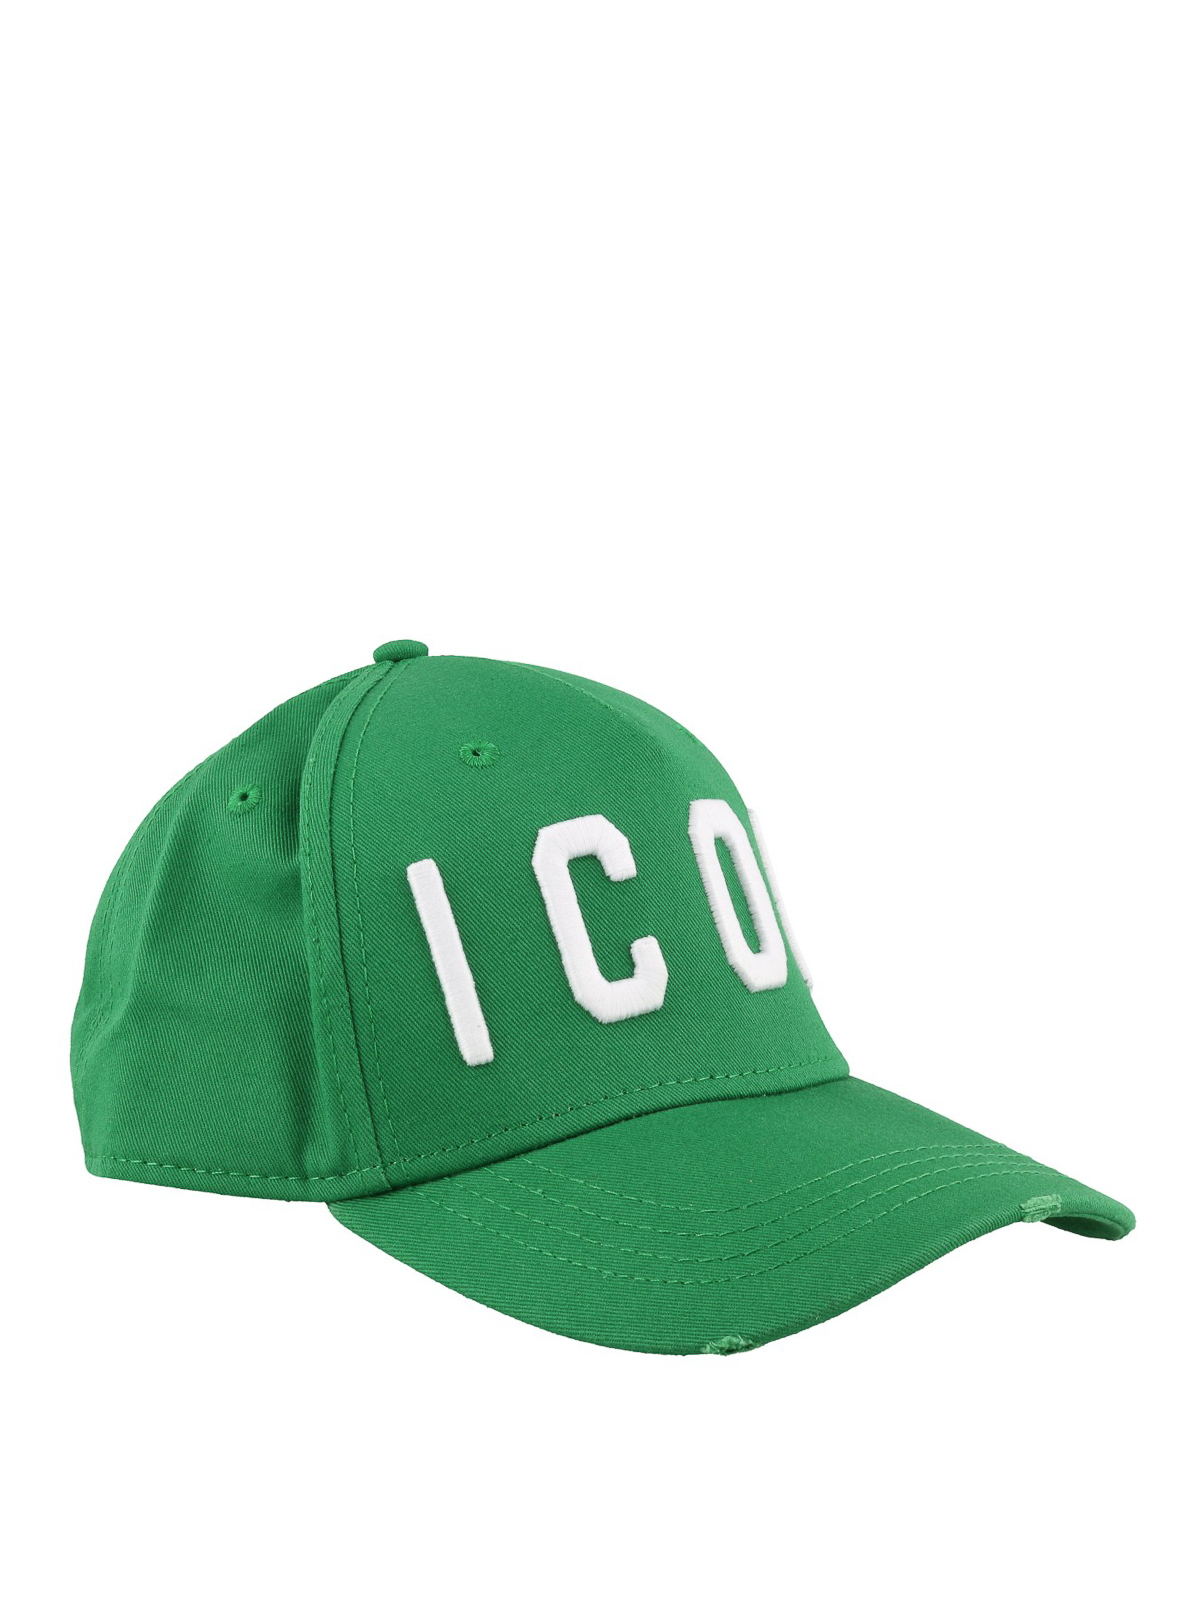 icon cap green